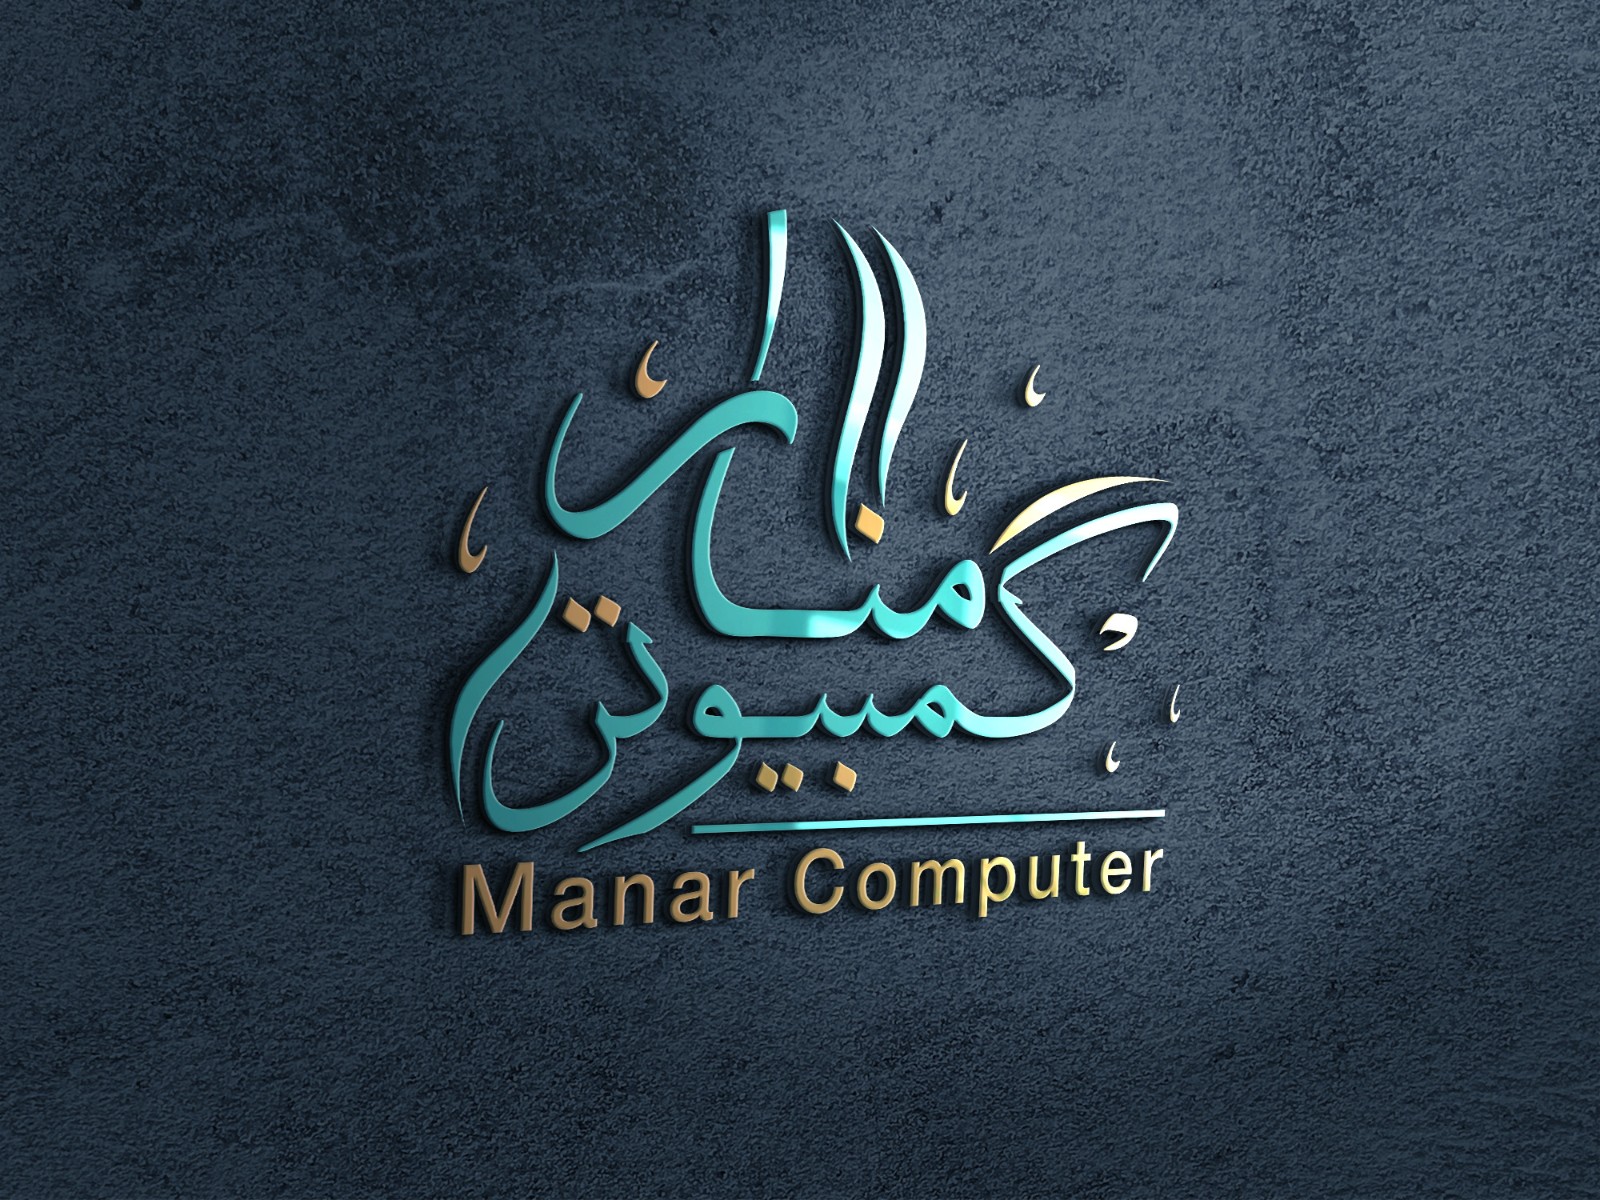 Manar Computer